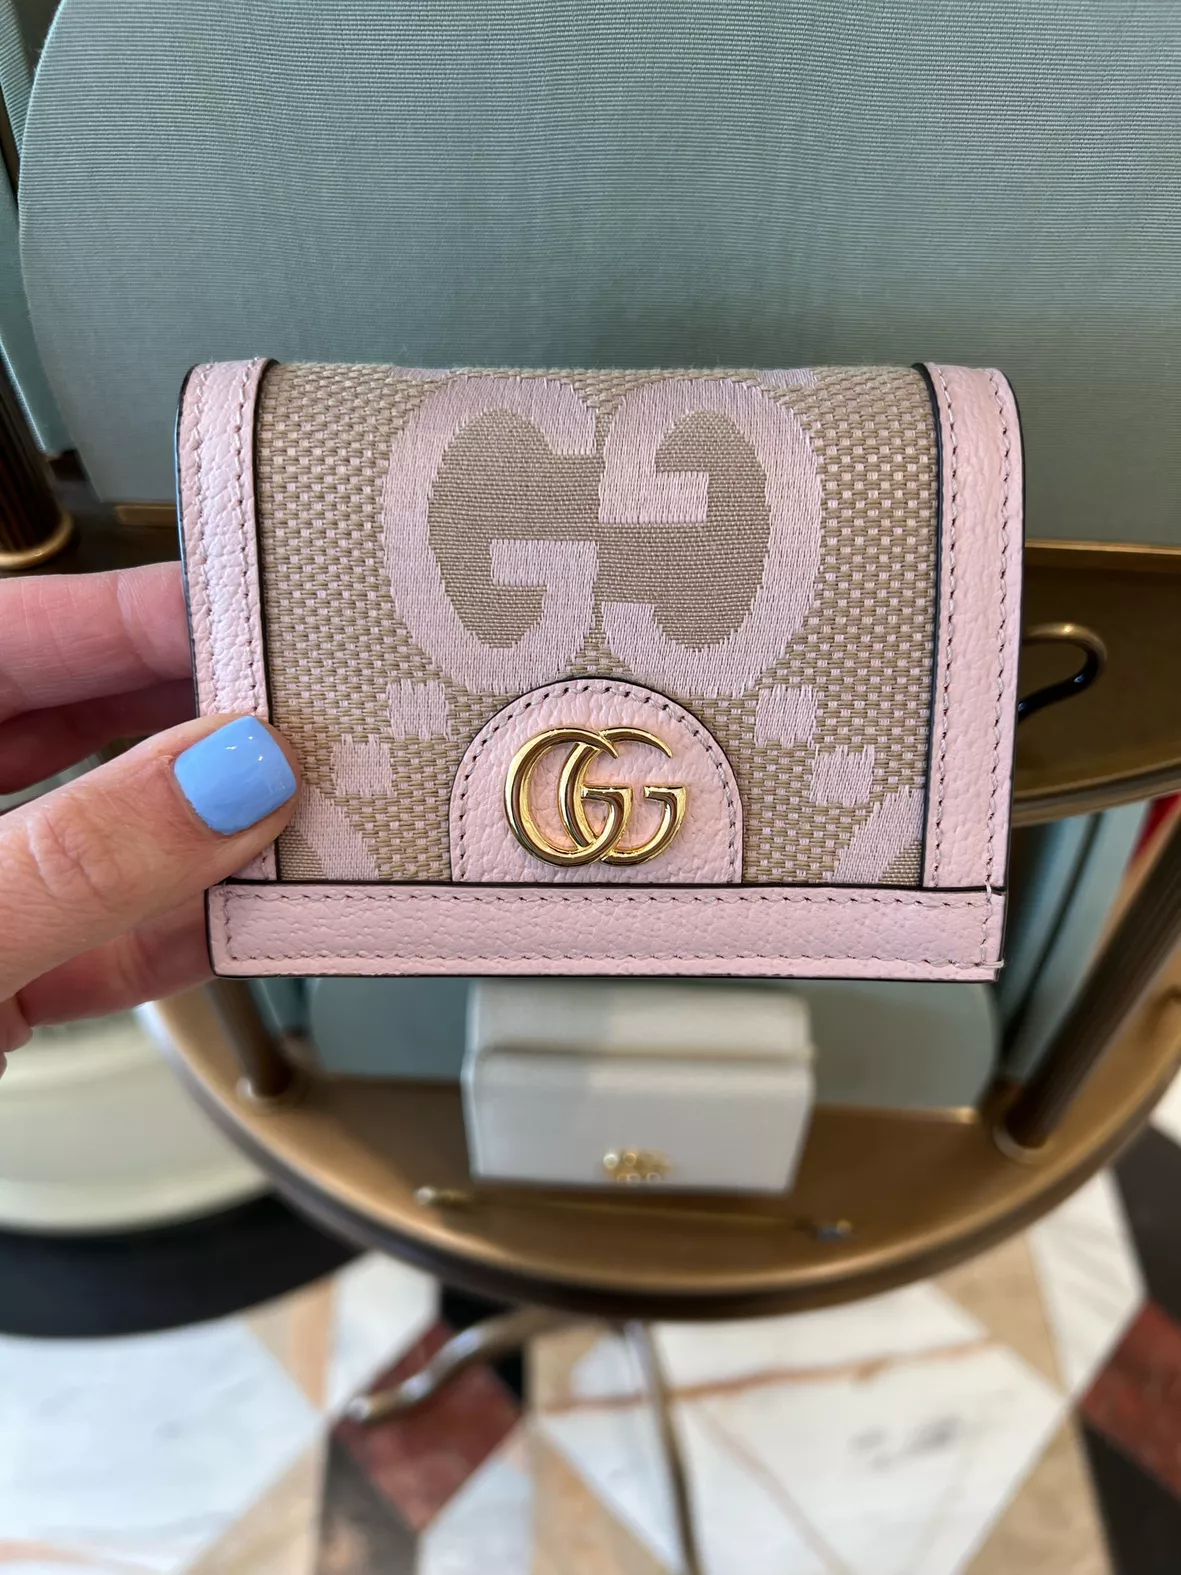 Gucci: Brown Jumbo GG Wallet